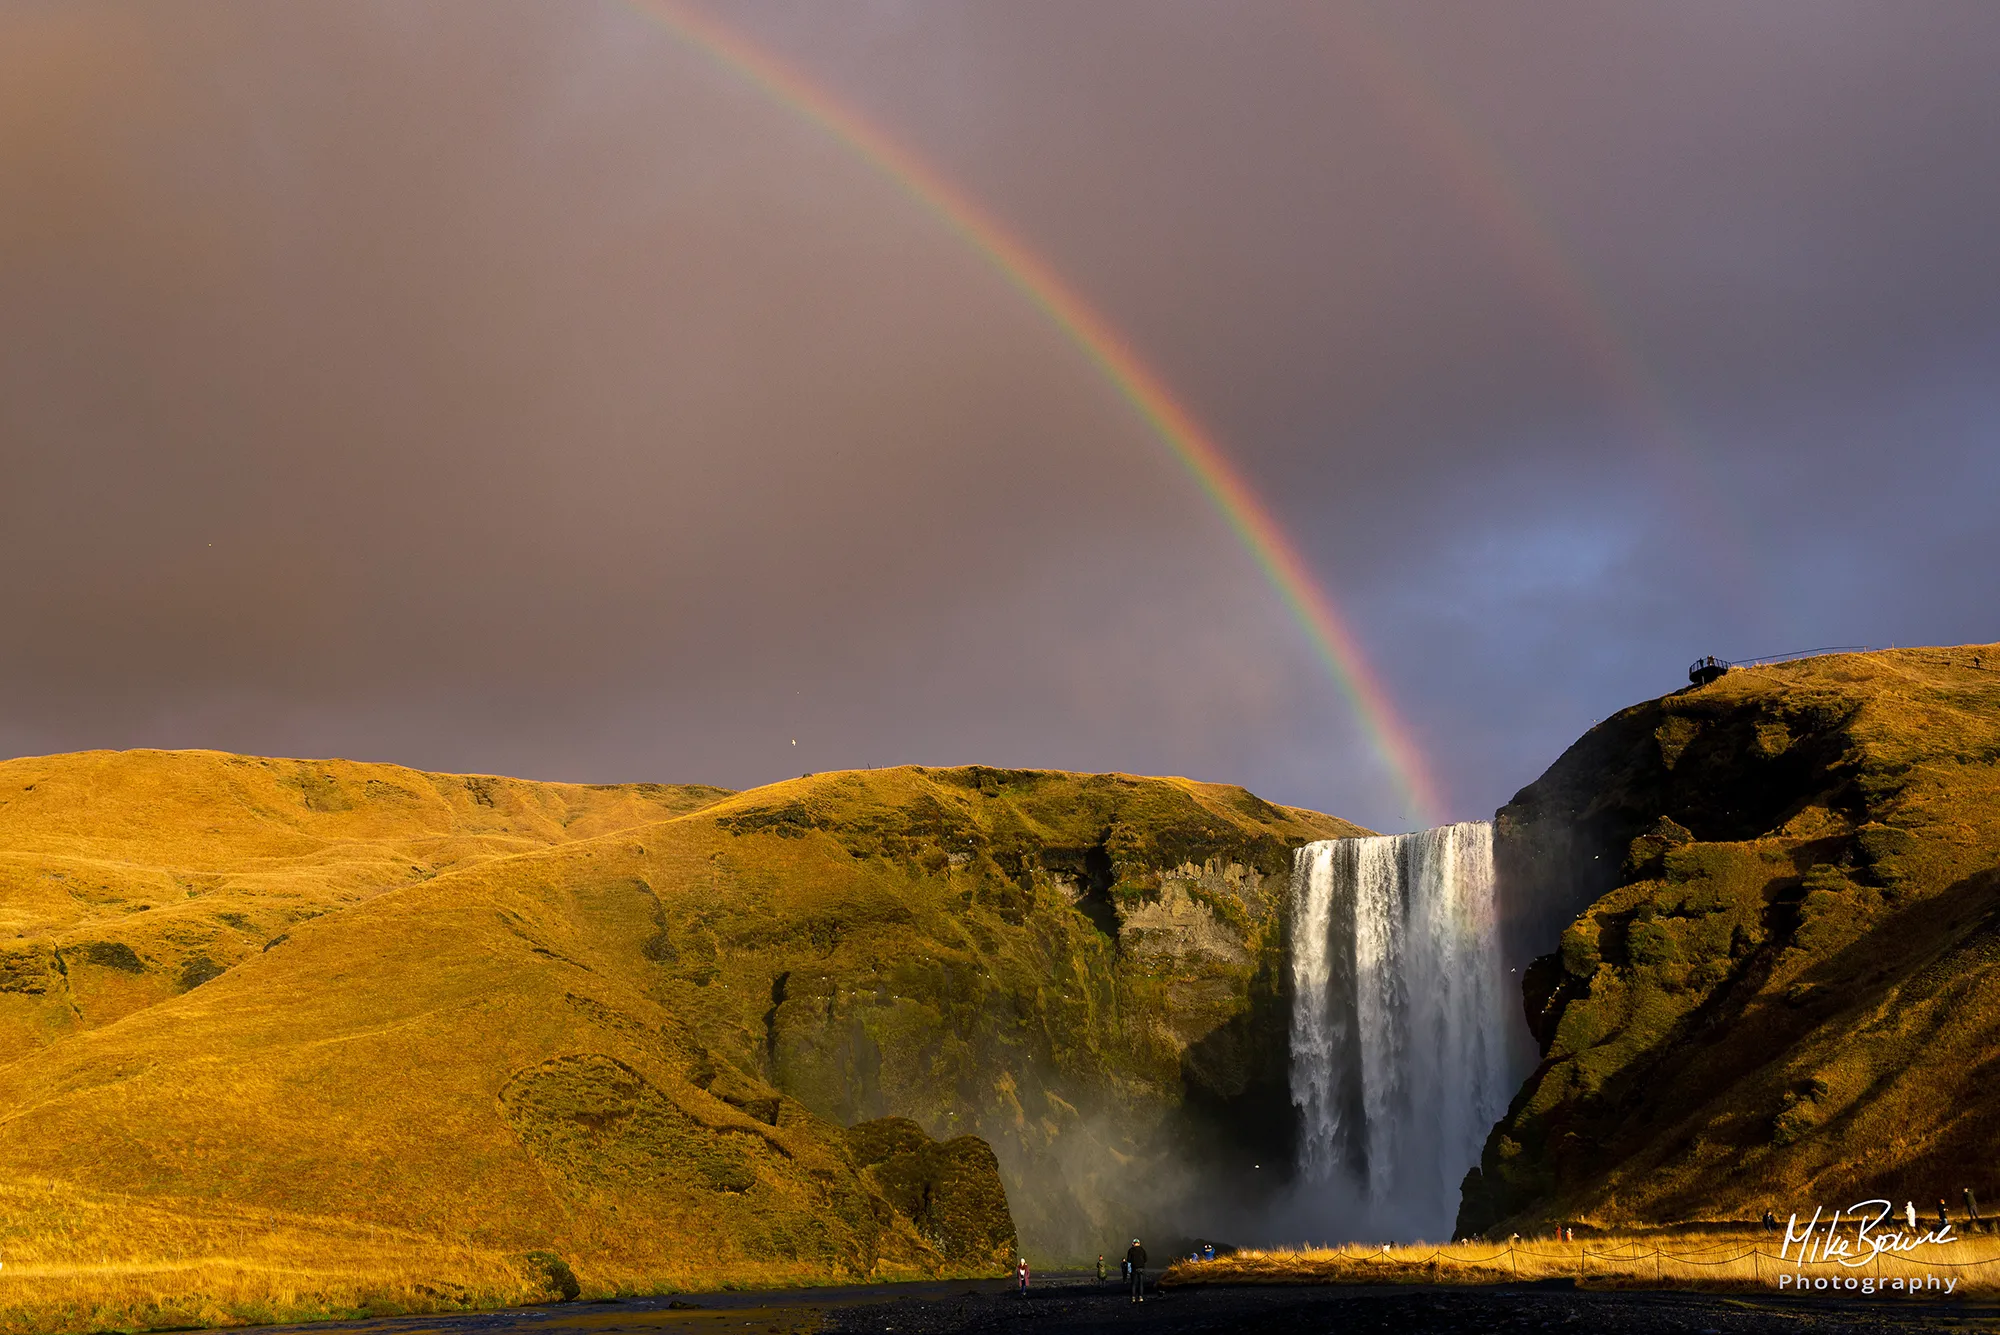 Rain clouds and rainbow over a waterfall